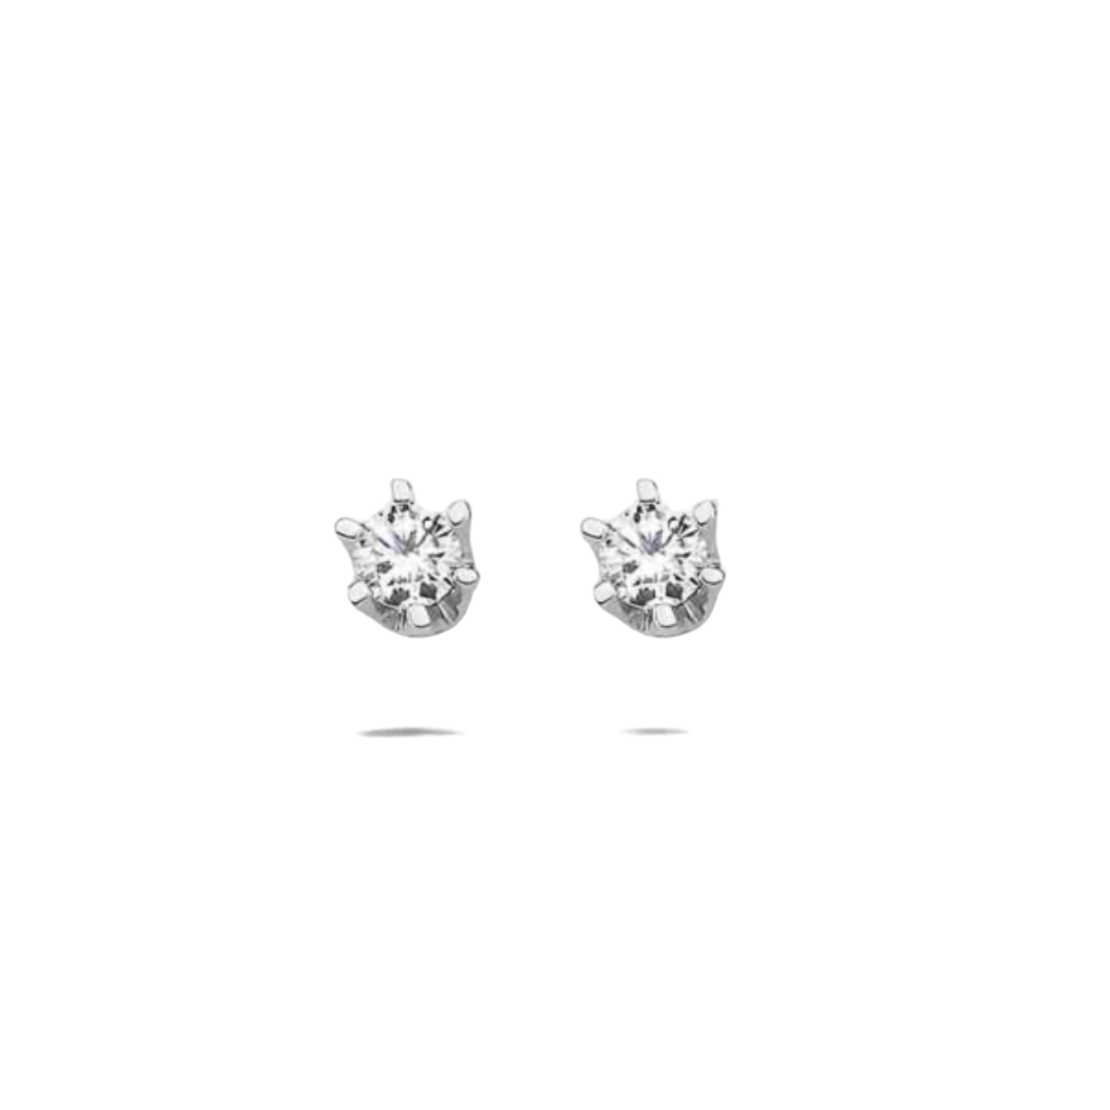 0.63 k Classic earrings with diamonds